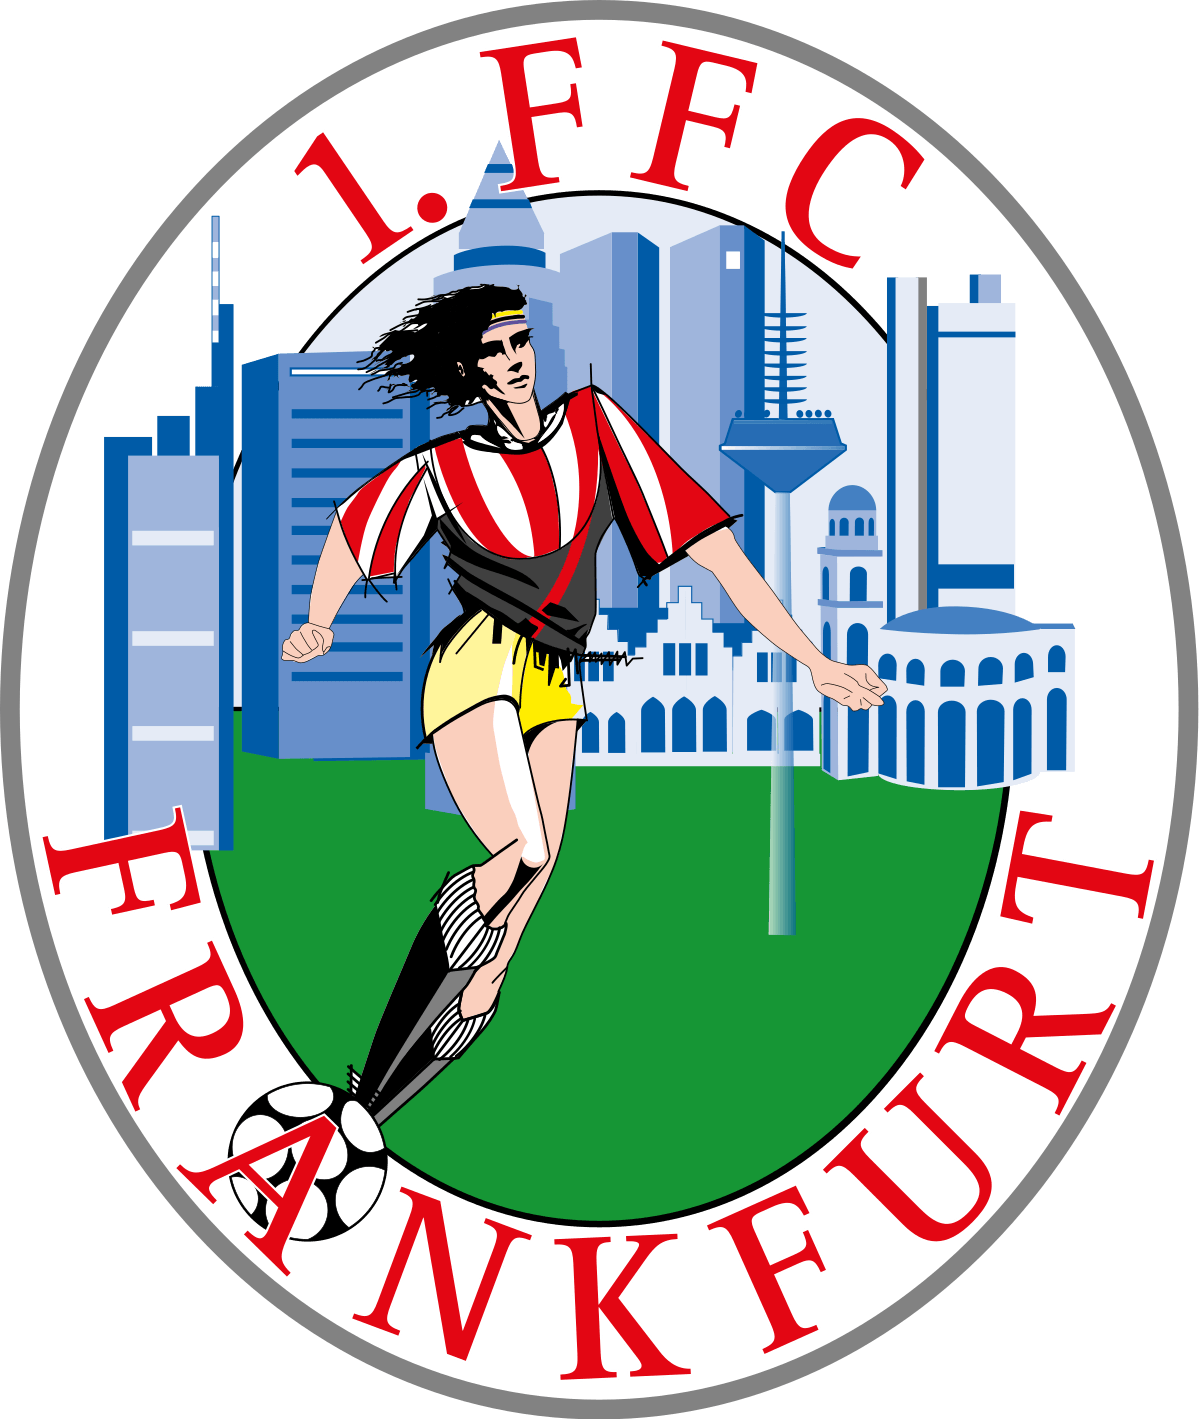 FFC Soccer Logo - 1. FFC Frankfurt